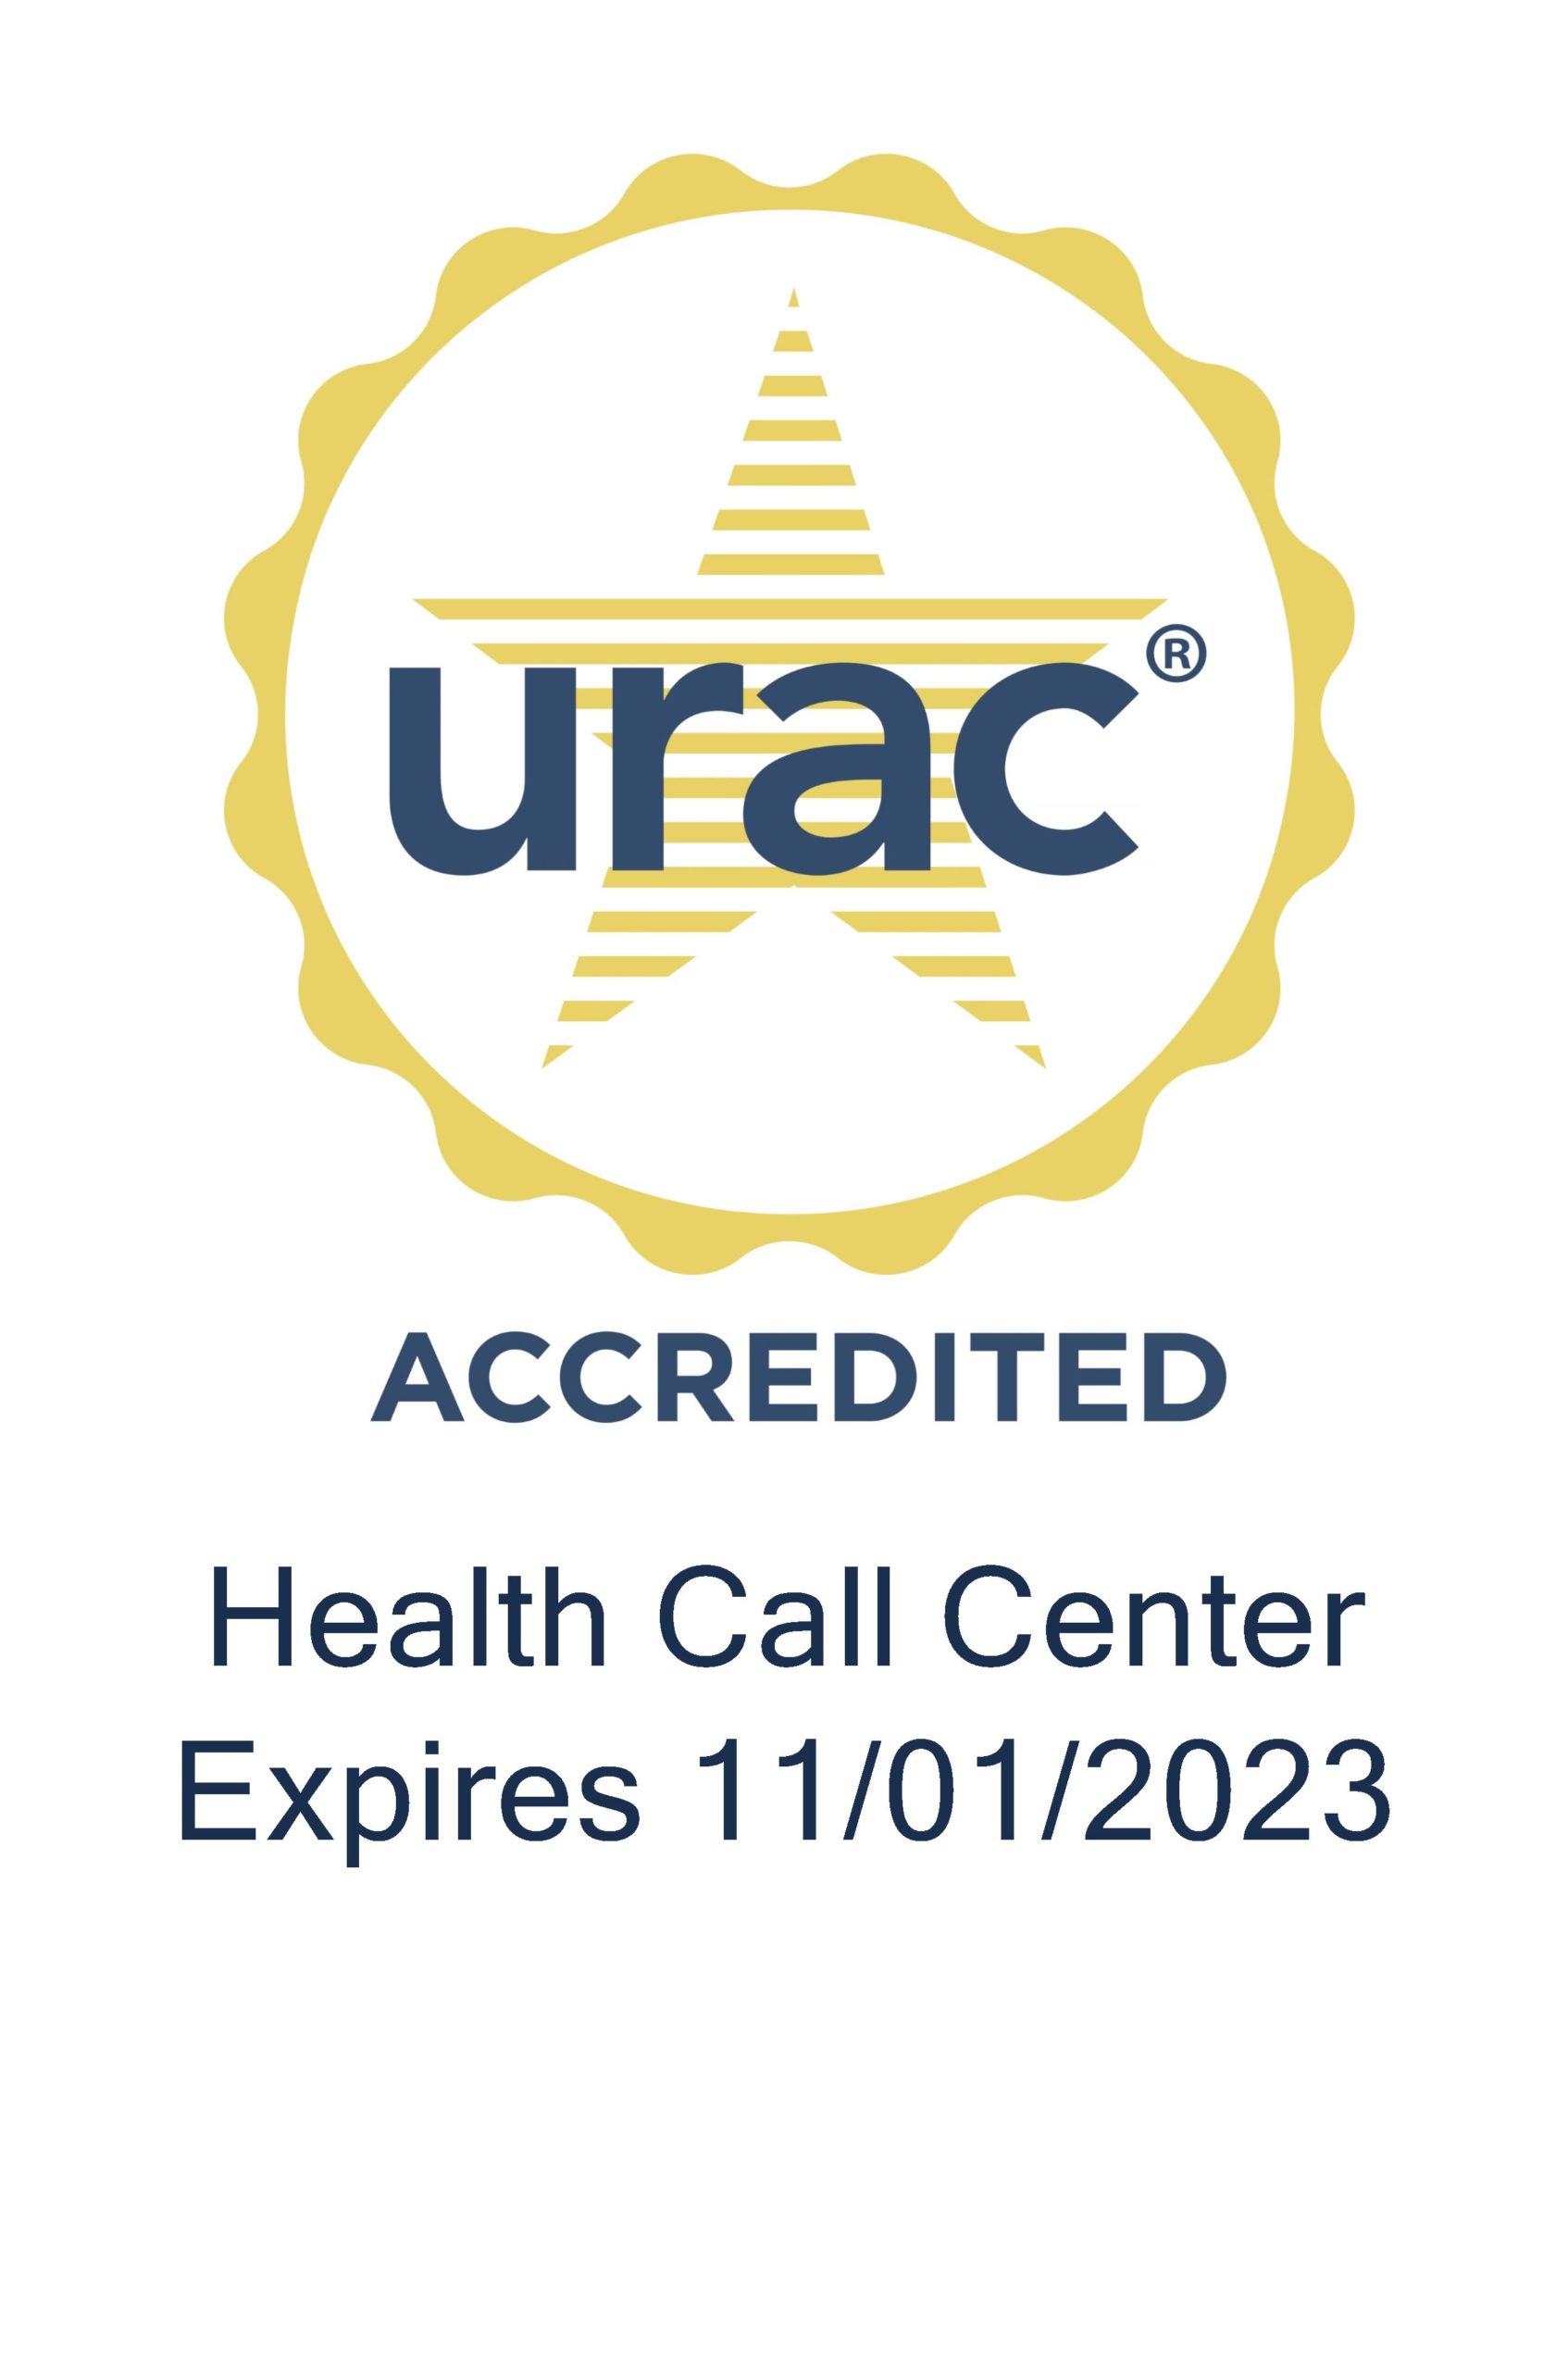 URAC accreditation